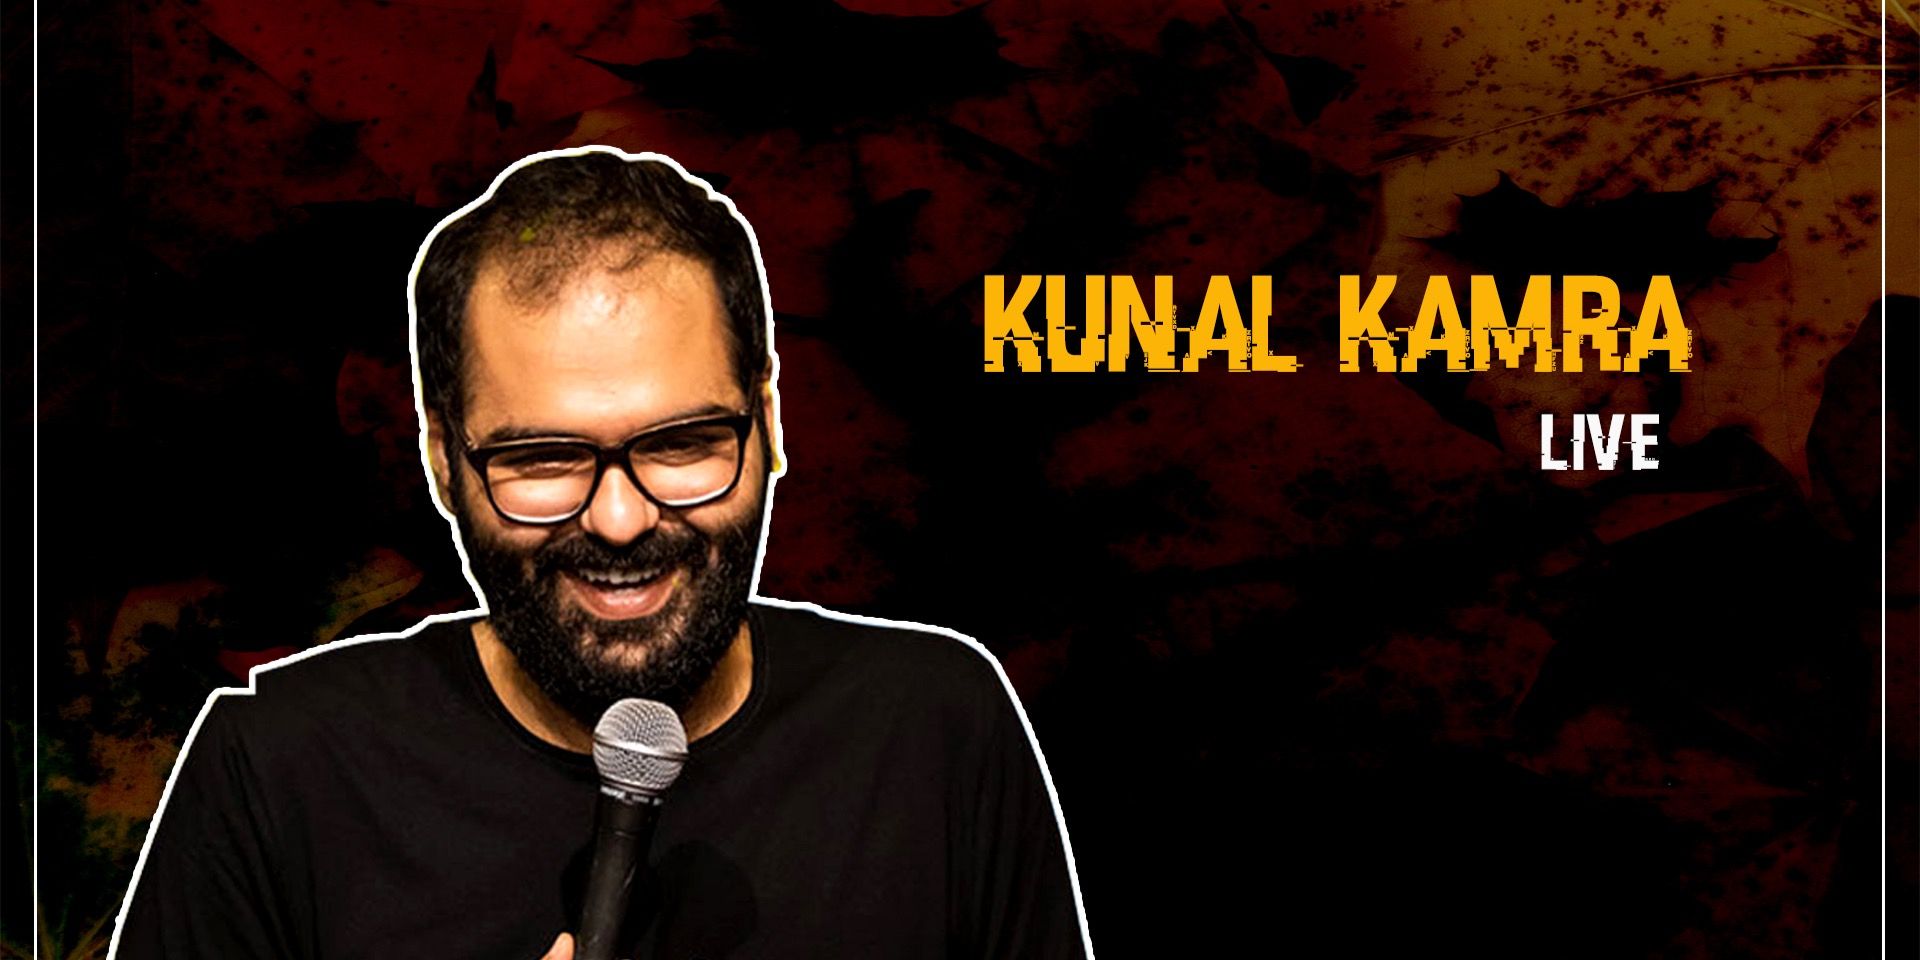 Kunal Kamra Live in Gurgaon